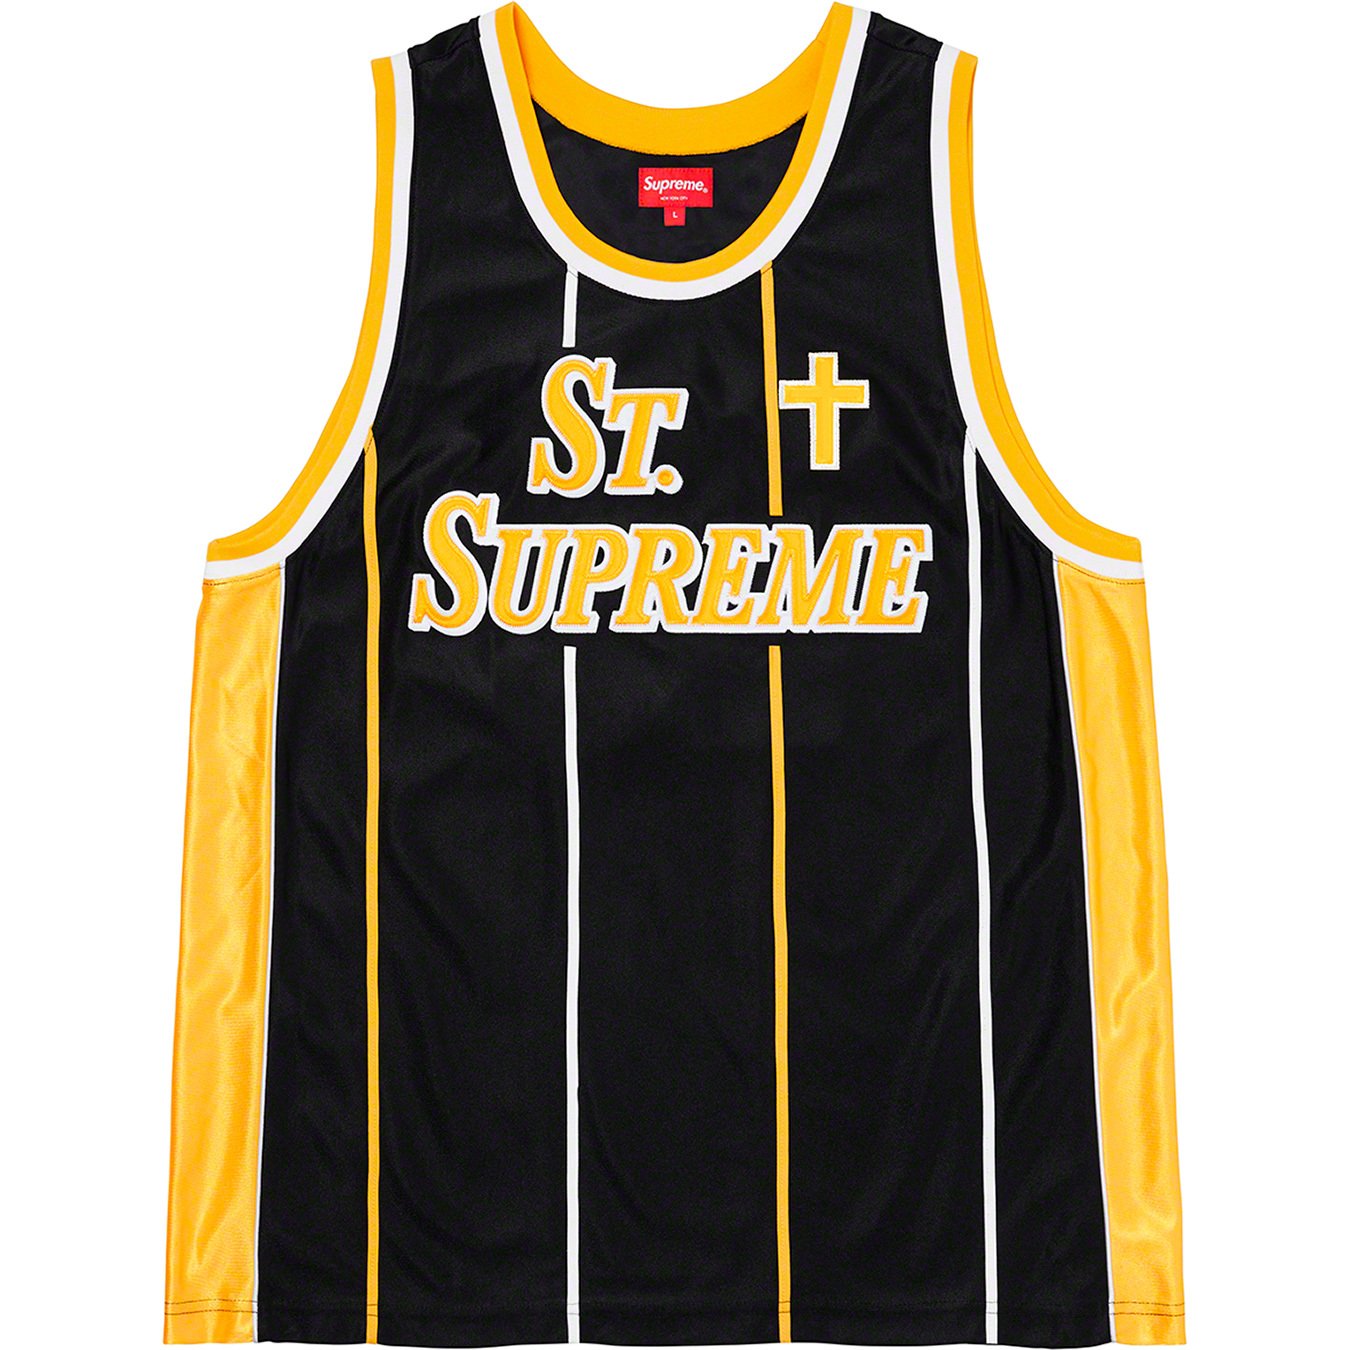 Supreme St. Supreme Basketball Jersey